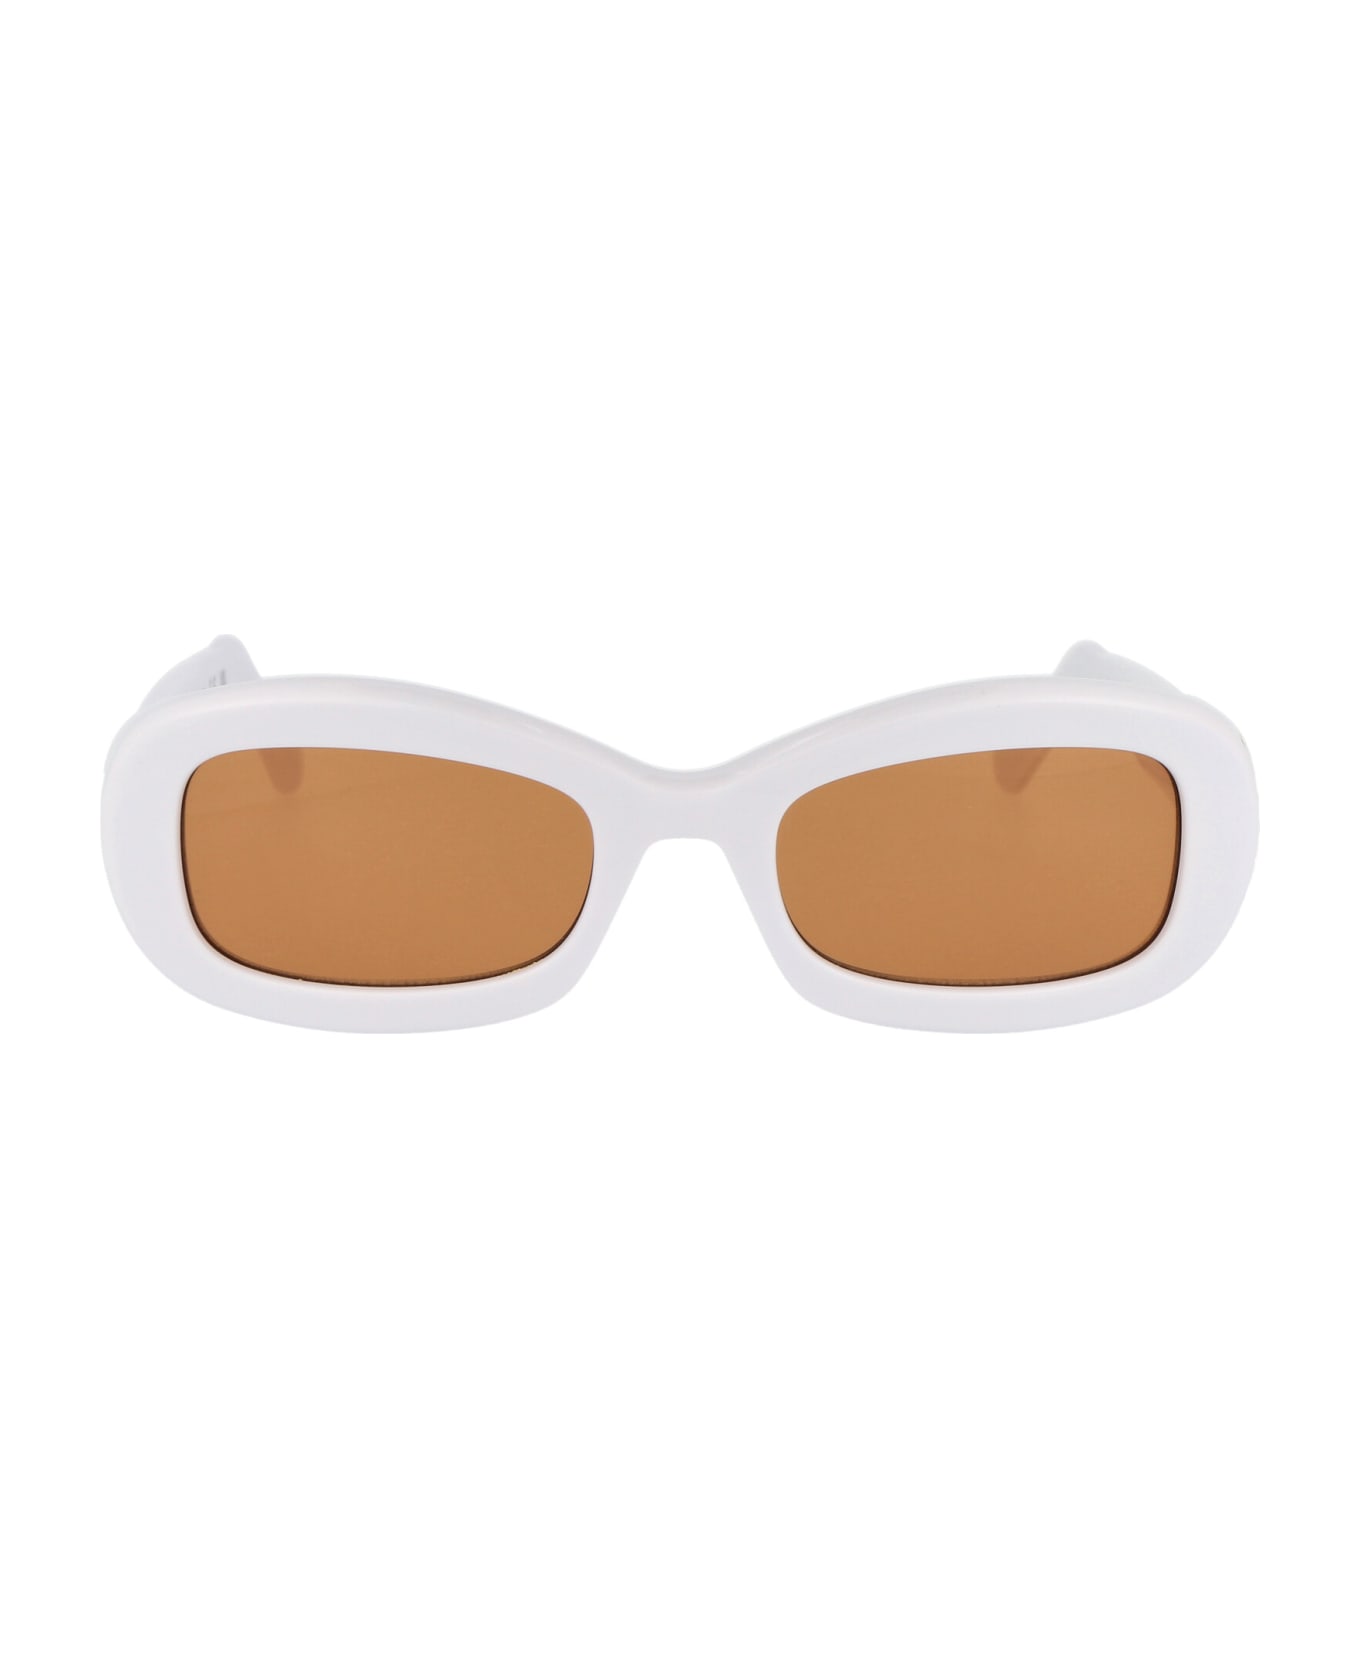 GCDS Gd0027 Sunglasses - 21E Bianco/Marrone